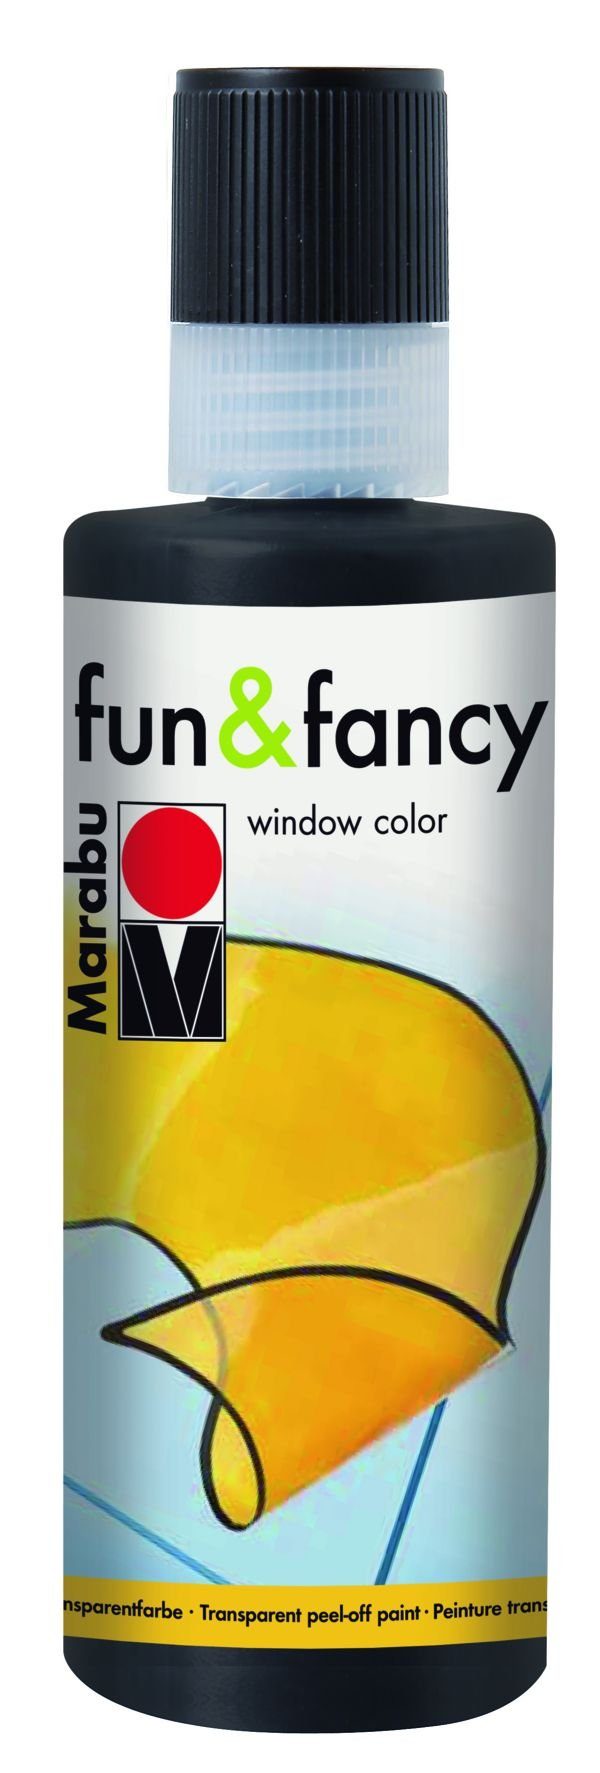 Marabu Kugelschreiber Window Color fun&fancy Soft-Konturen-Schwarz 